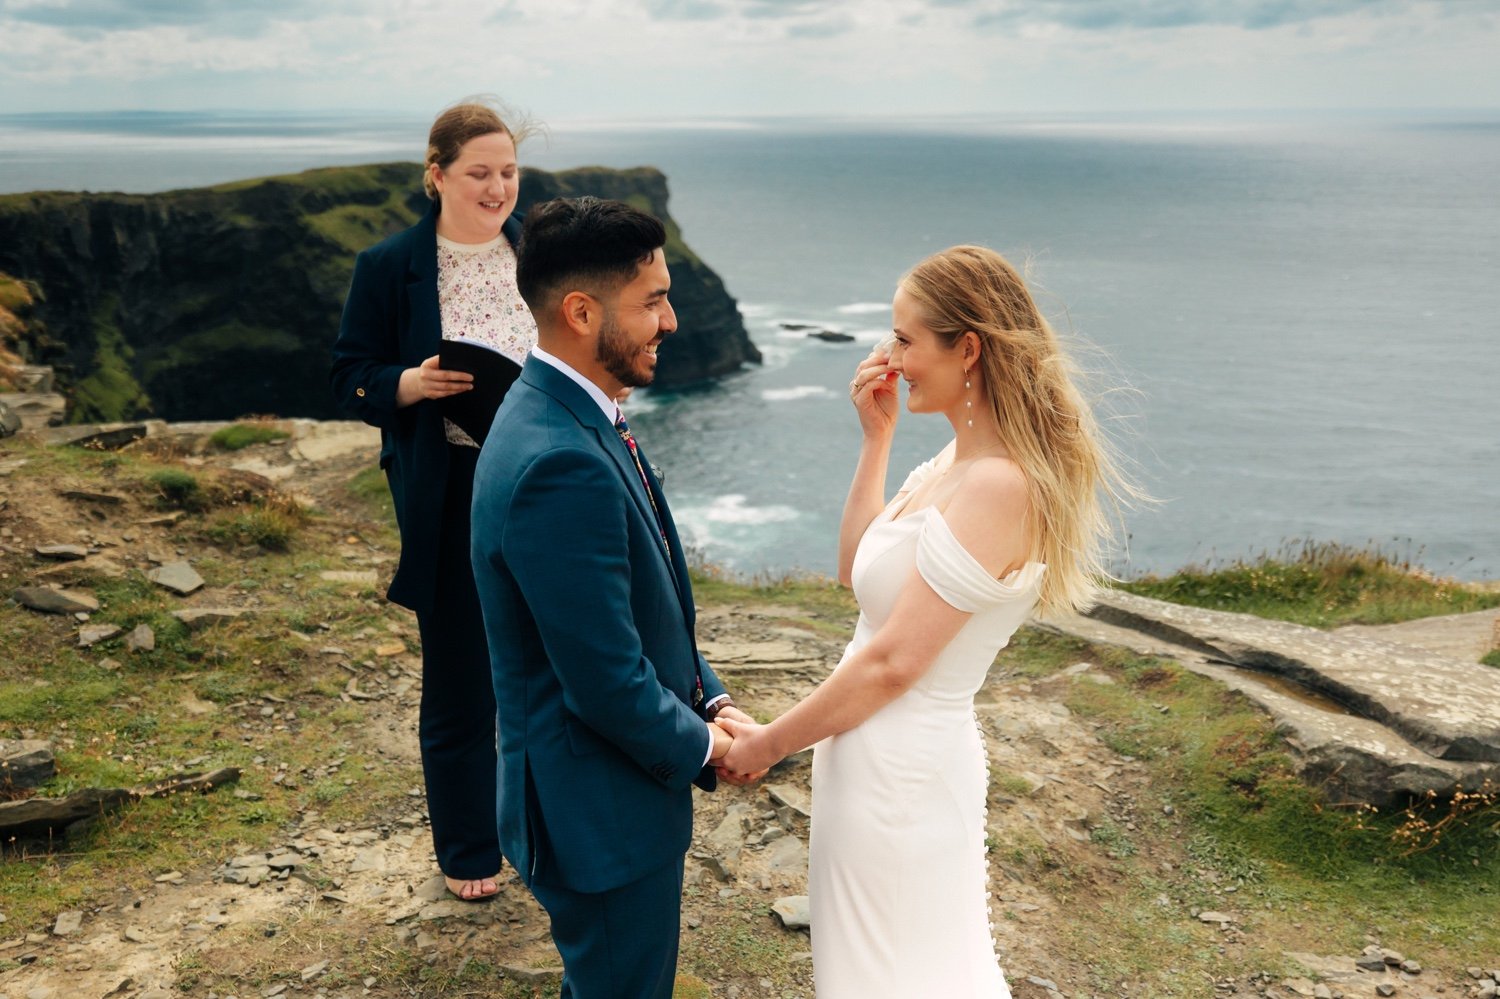 32_Ireland-cliff-elopement-wedding-photographer-kmp-photography-9361.jpg